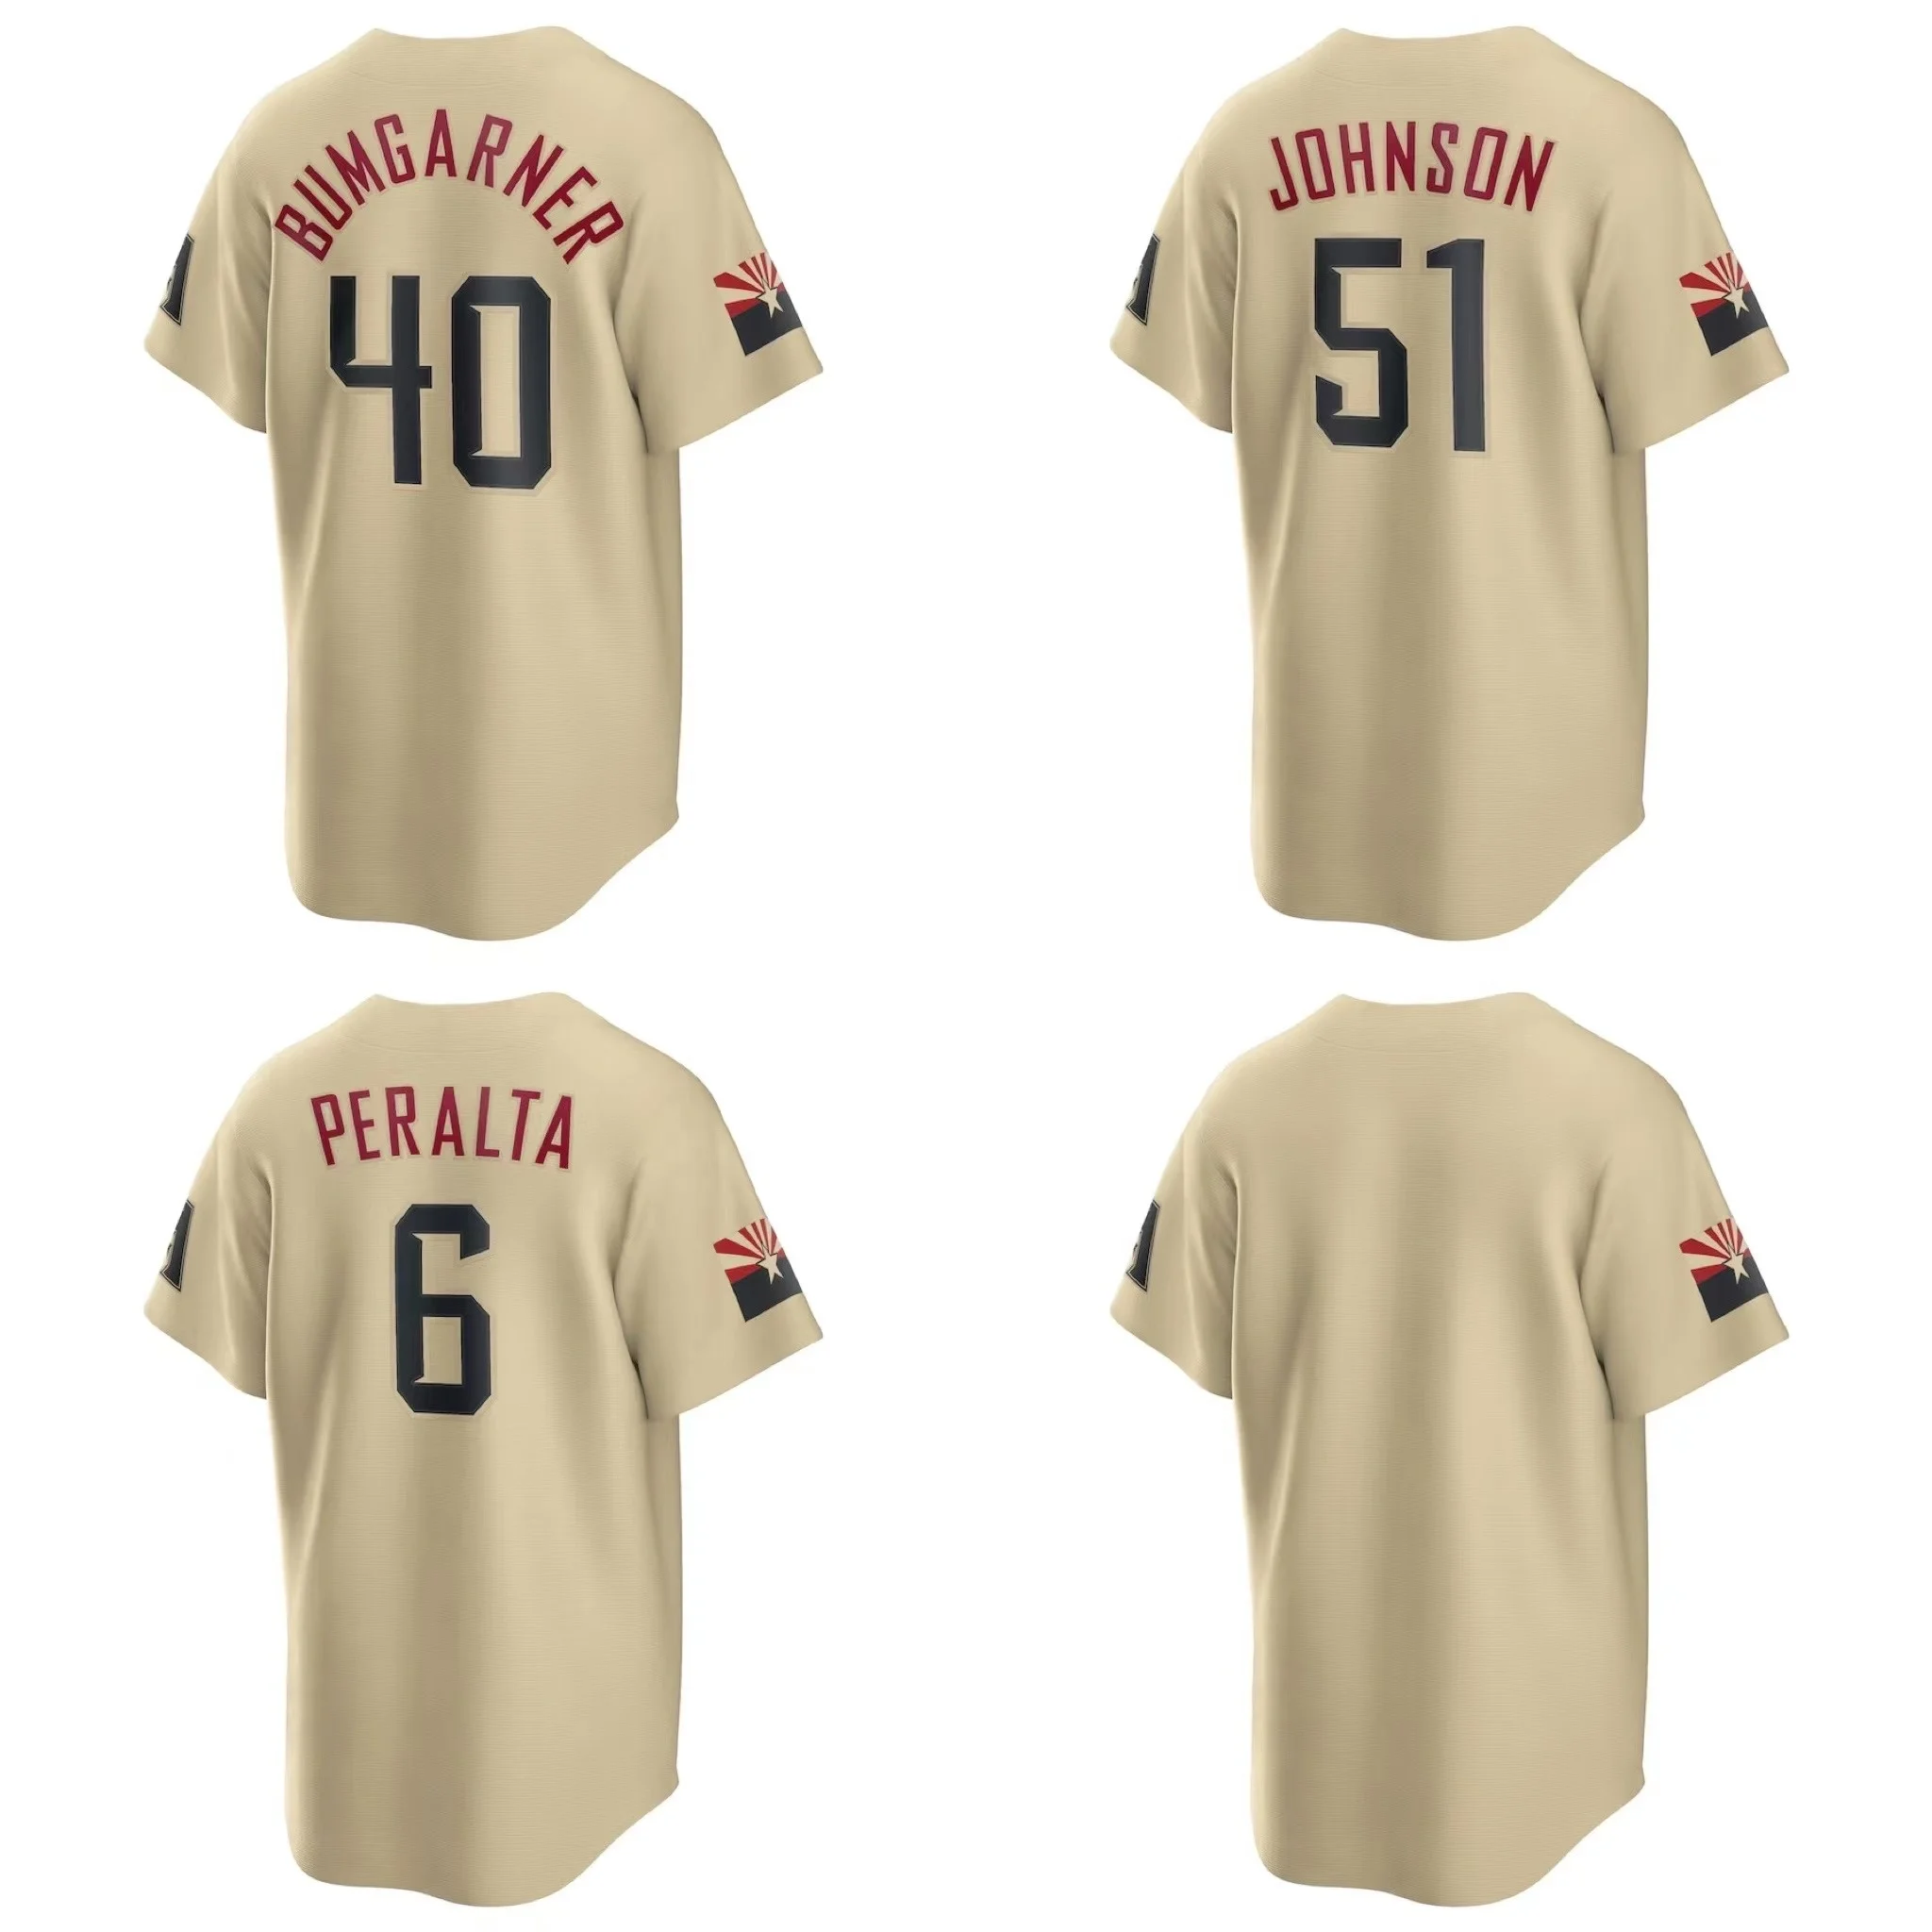 Wholesale Wholesale Arizona Diamondback Stitched Baseball Jersey Cheap  Men's Sand Softball Wear Team Uniform #51 Johnson #40 Bumgarner From  m.